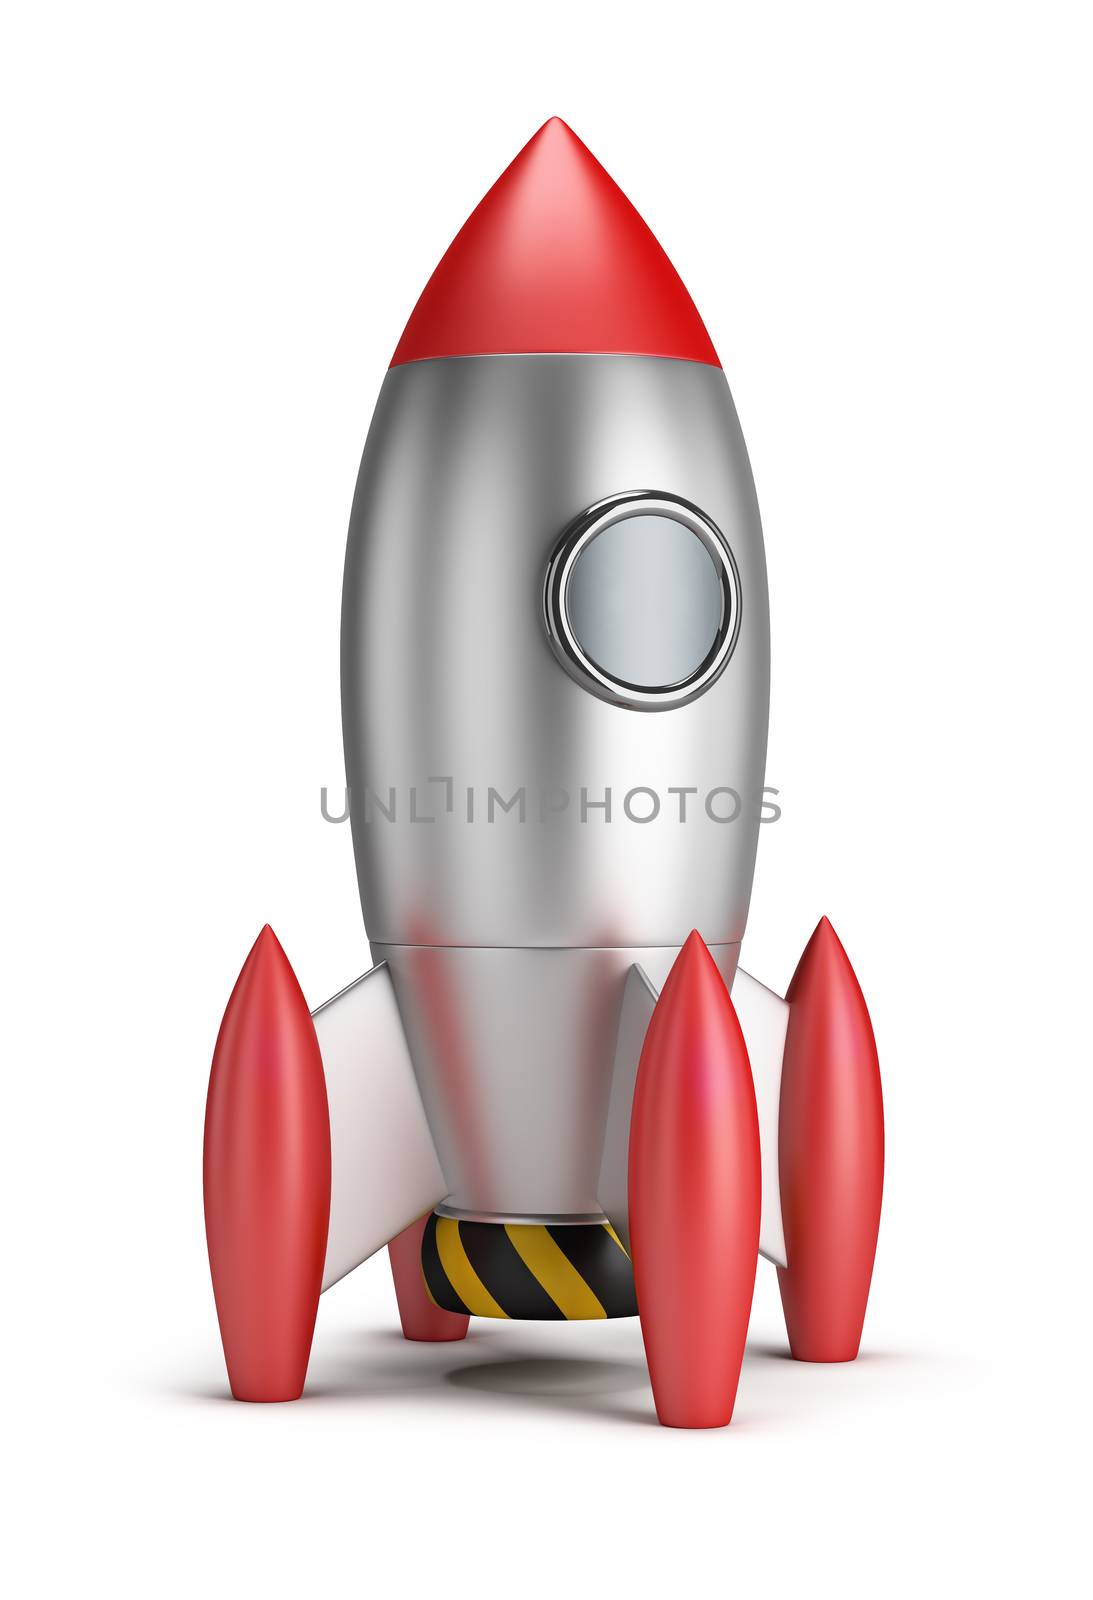 Steel rocket. 3d image. White background.